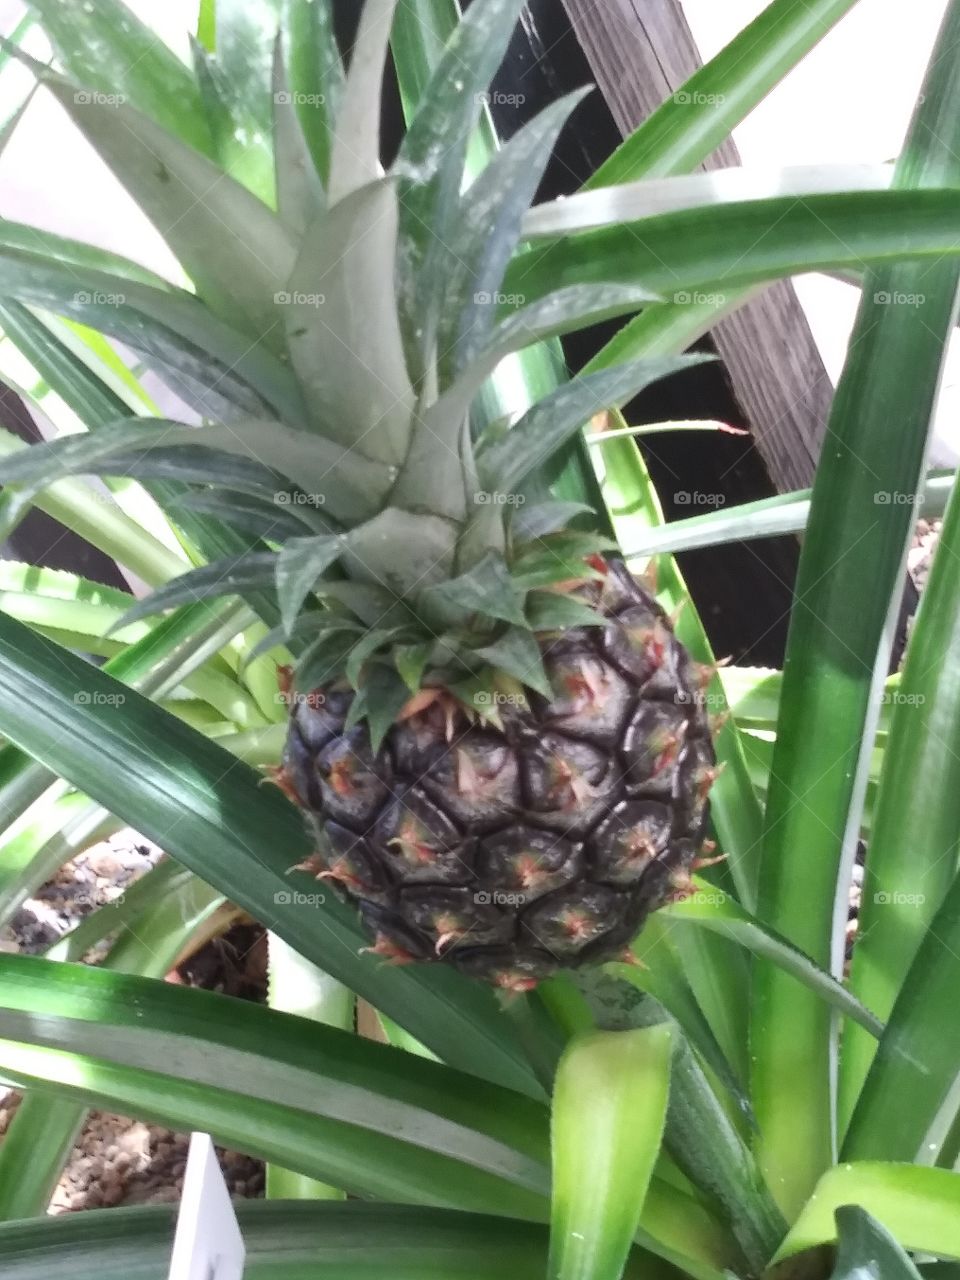 little pineapple